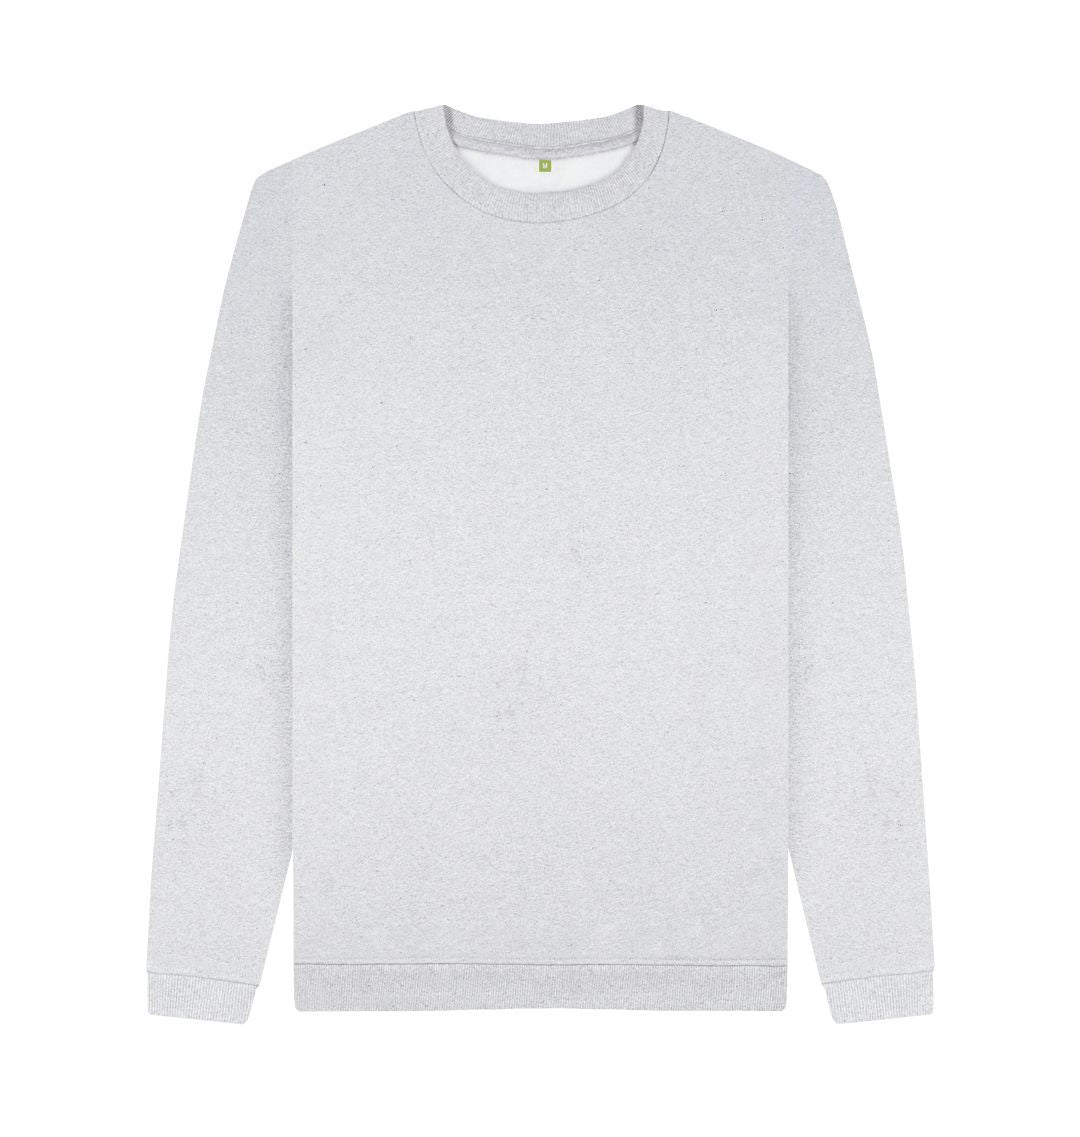 Grey Men's sustainable essential sweater